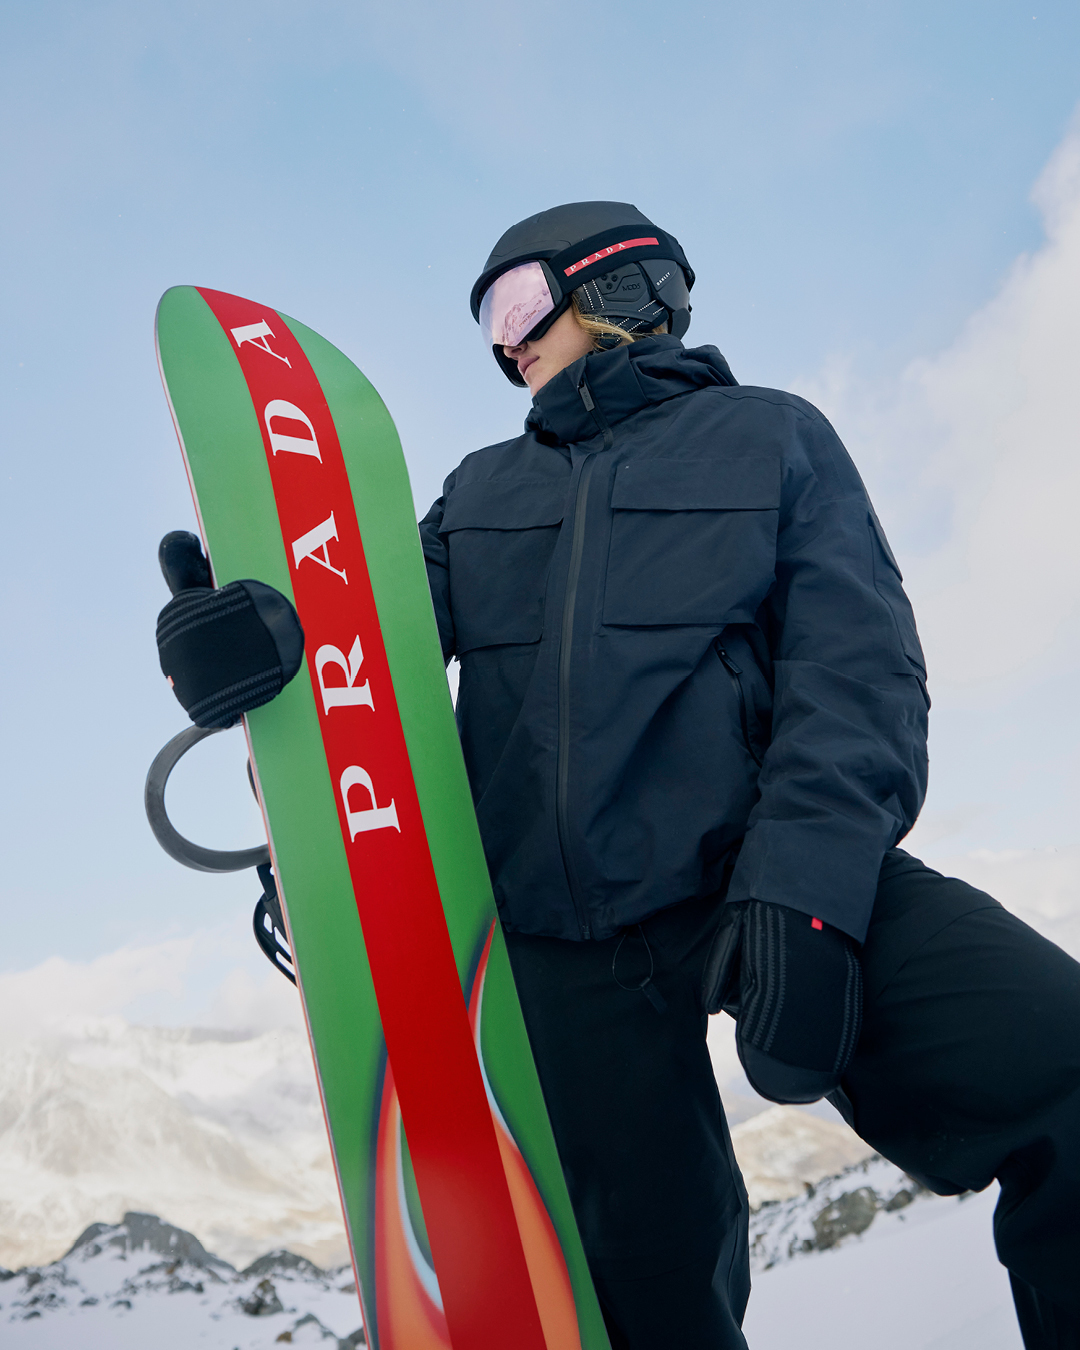 prada@instagram on Pinno: Snowboarder Julia Marino makes a return ...